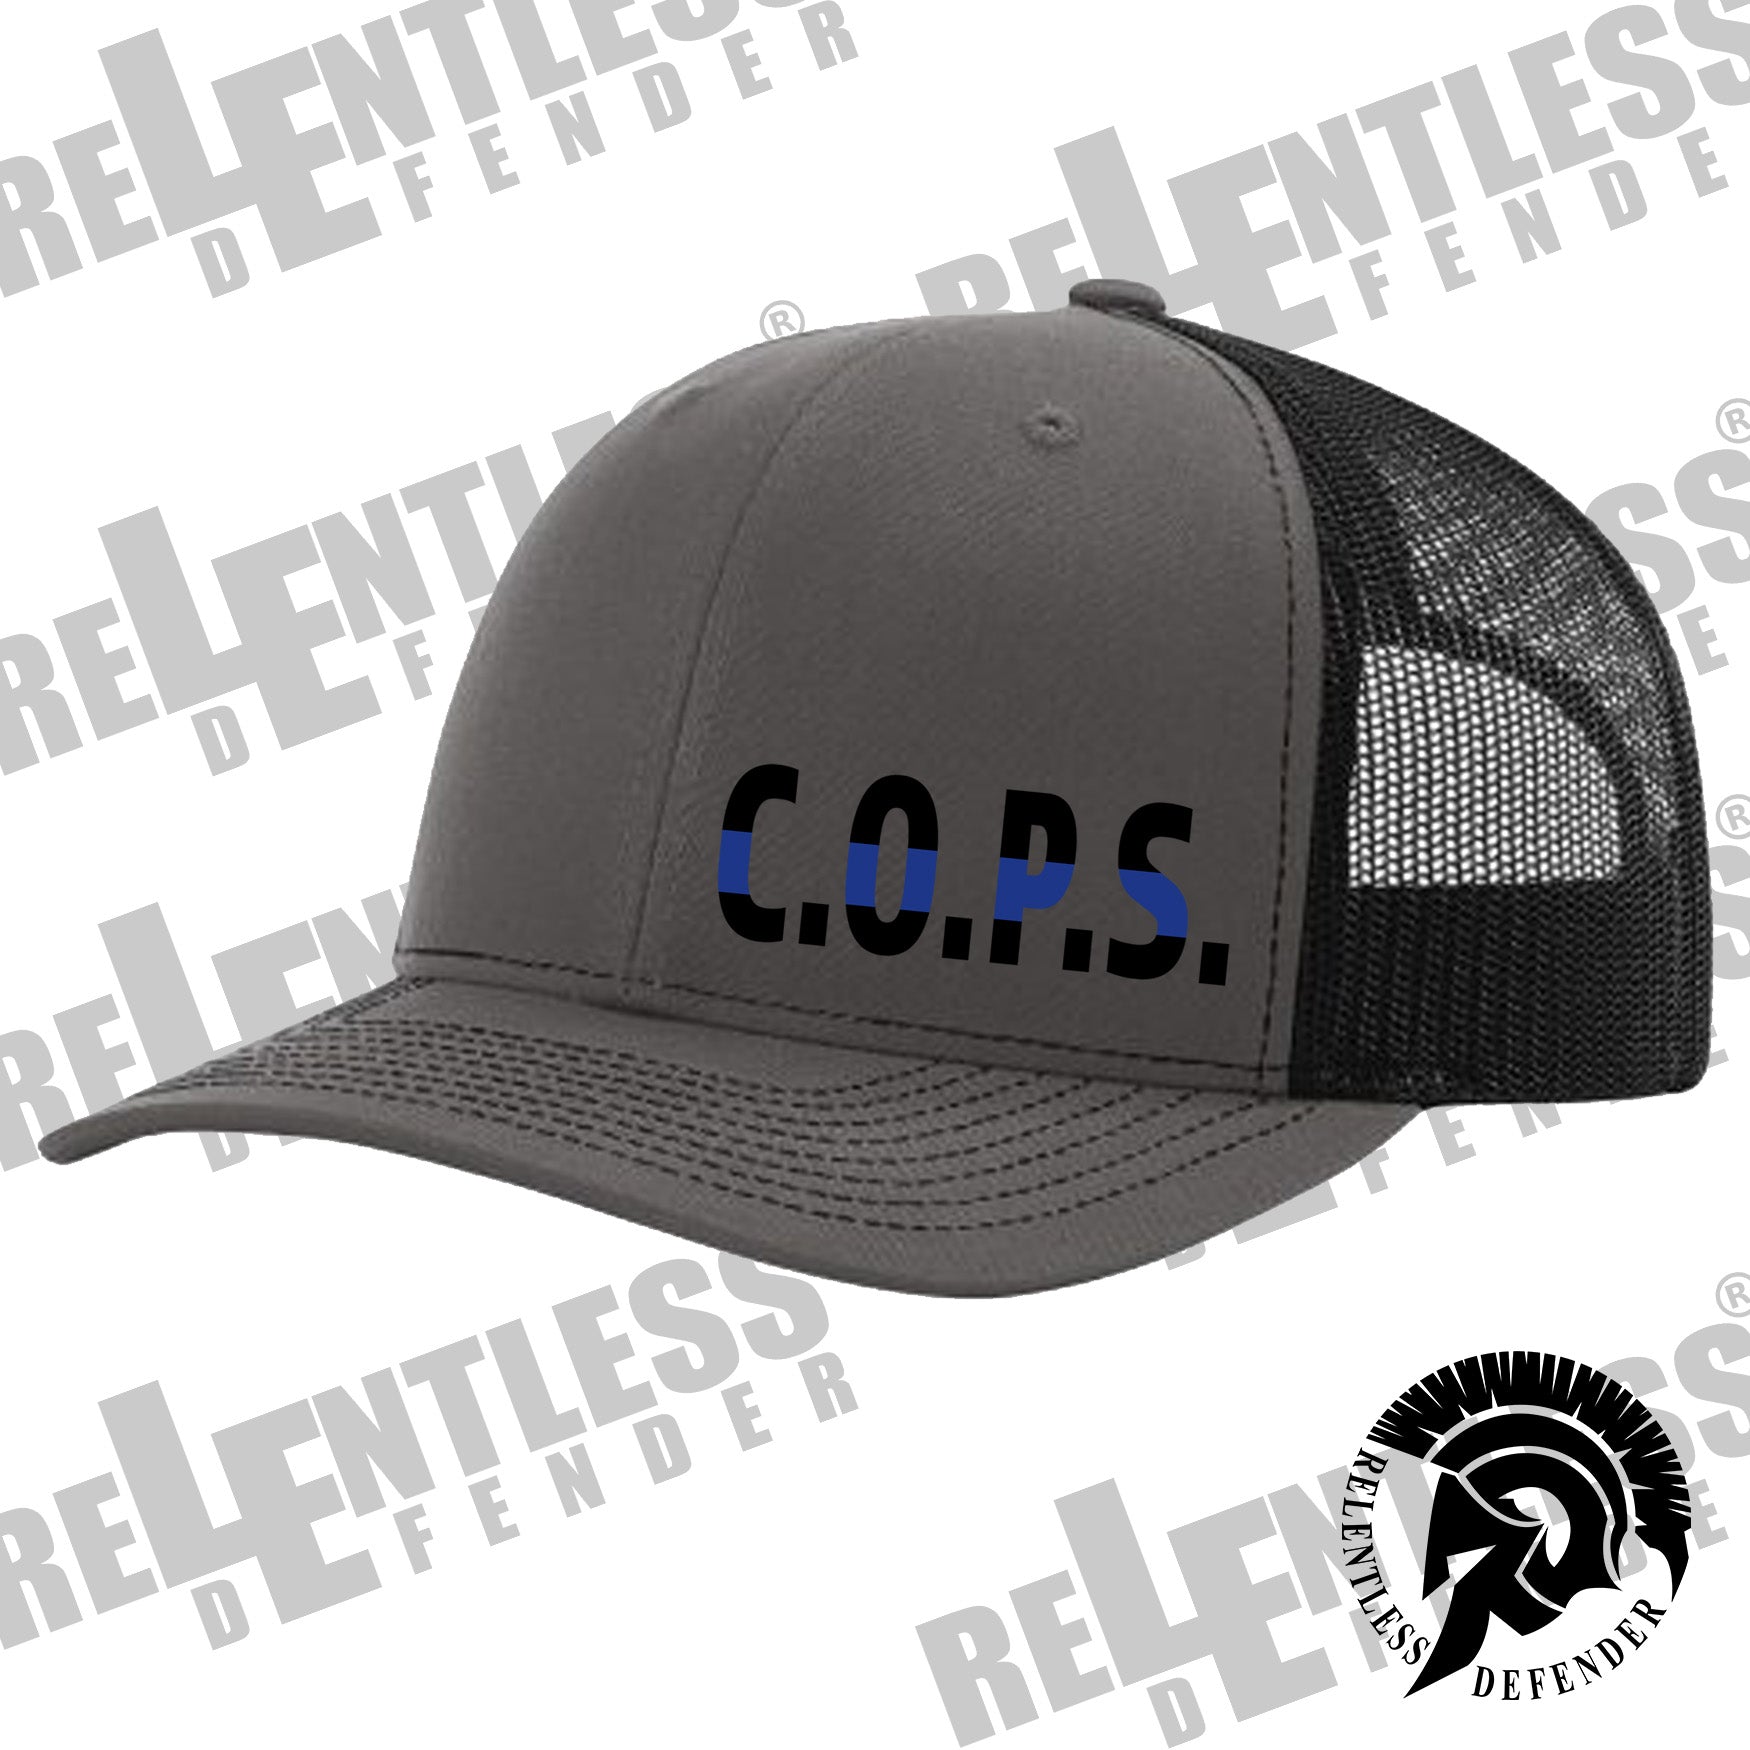 Relentless Defender C.O.P.S. Hat Relentless Defender 